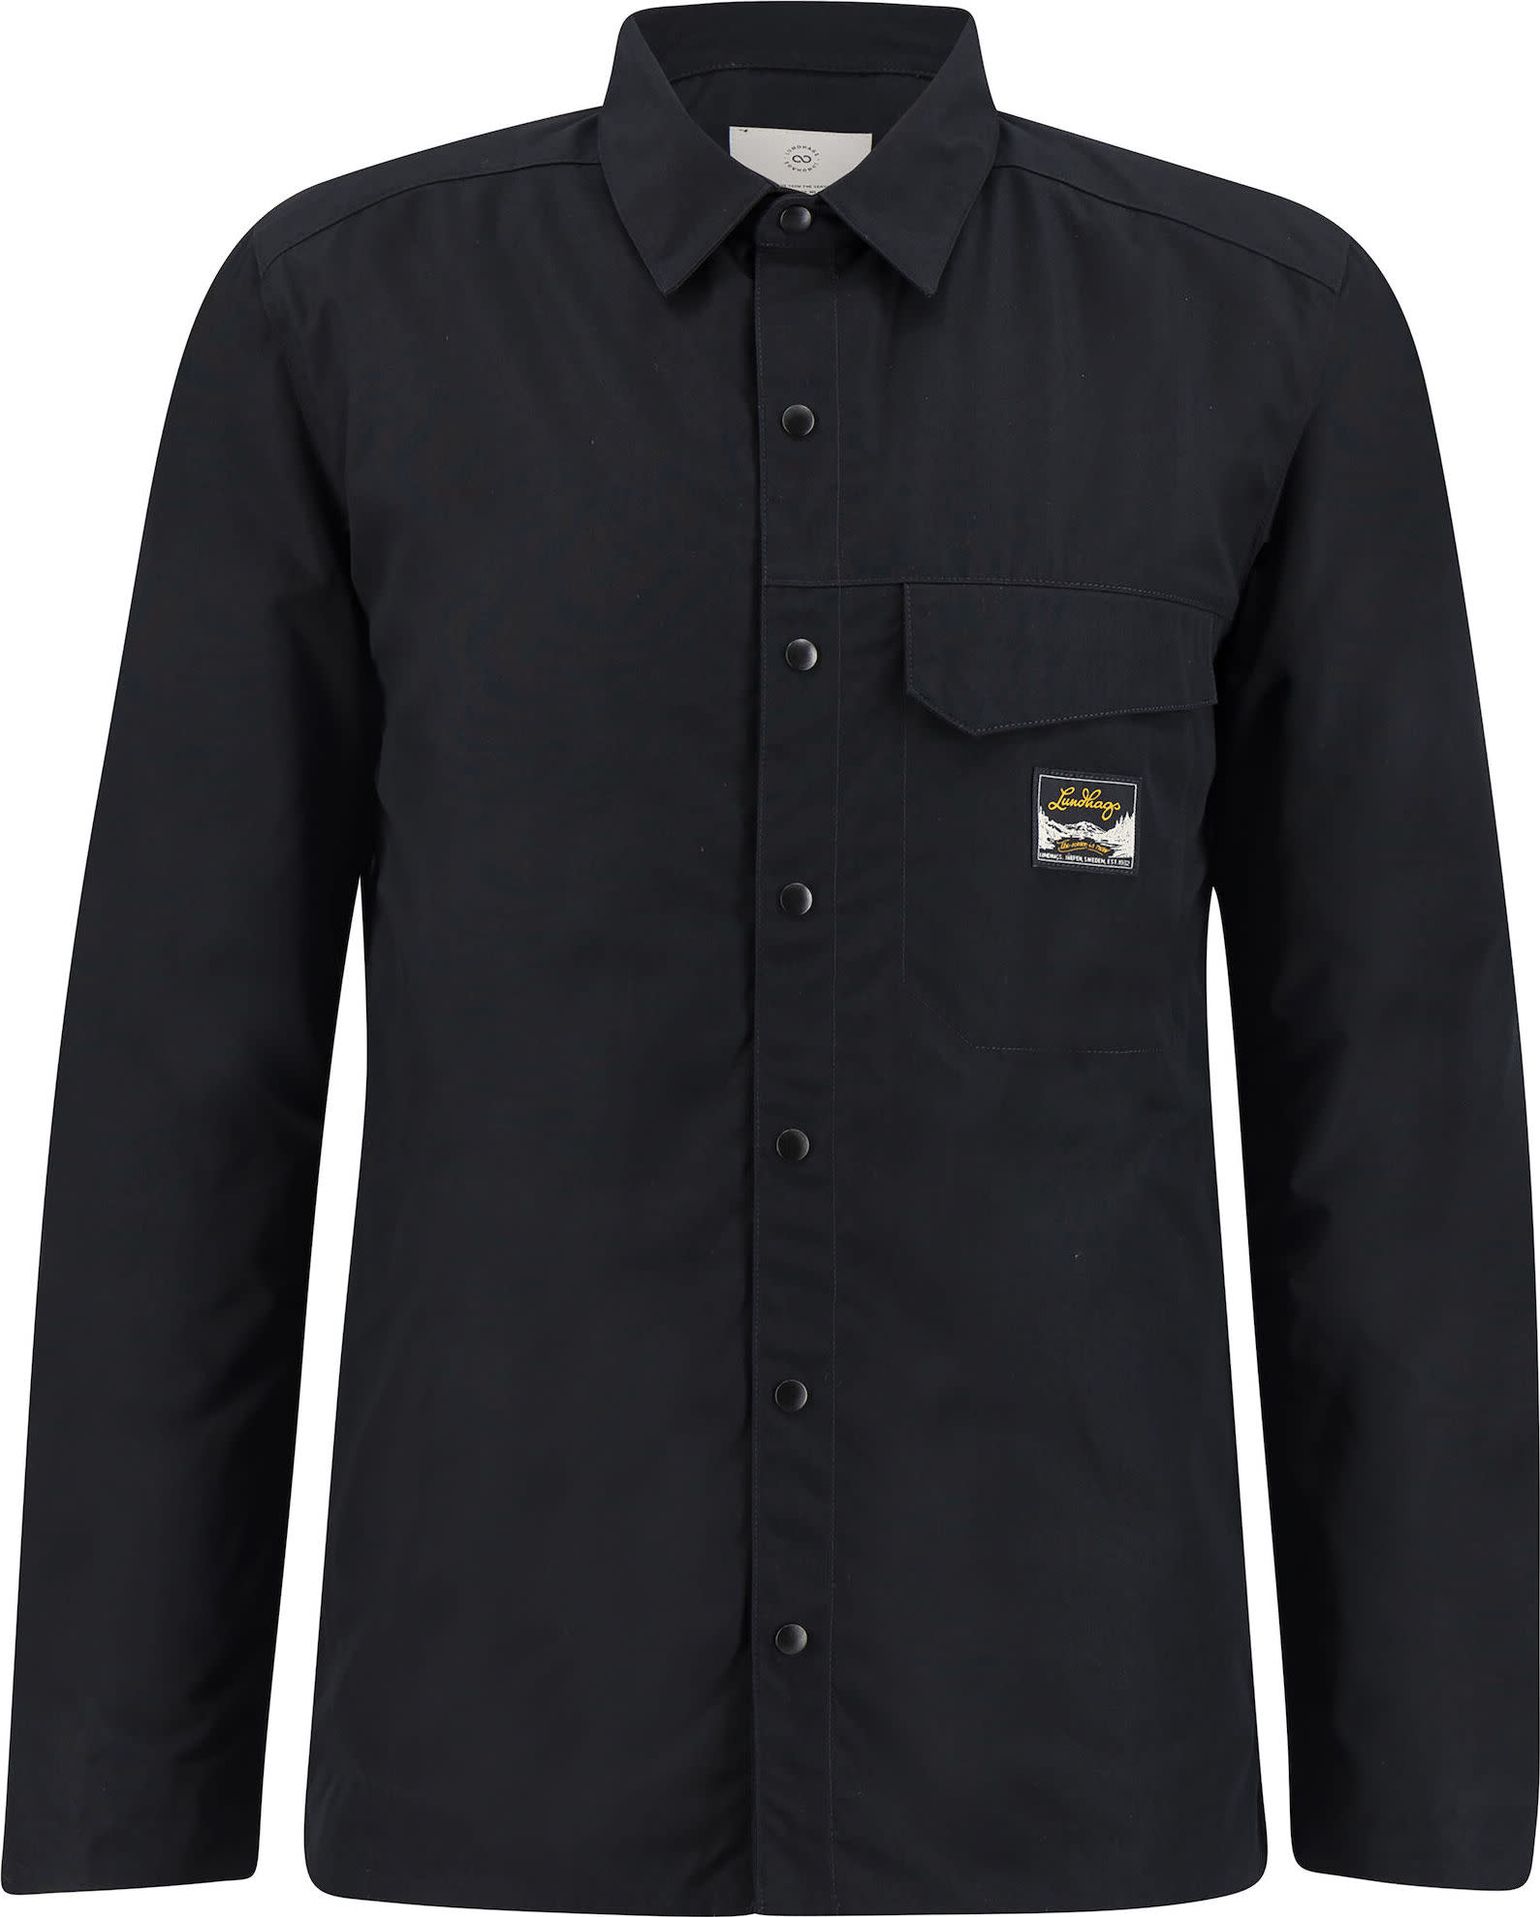 Unisex Knak Insulated Shirt Black